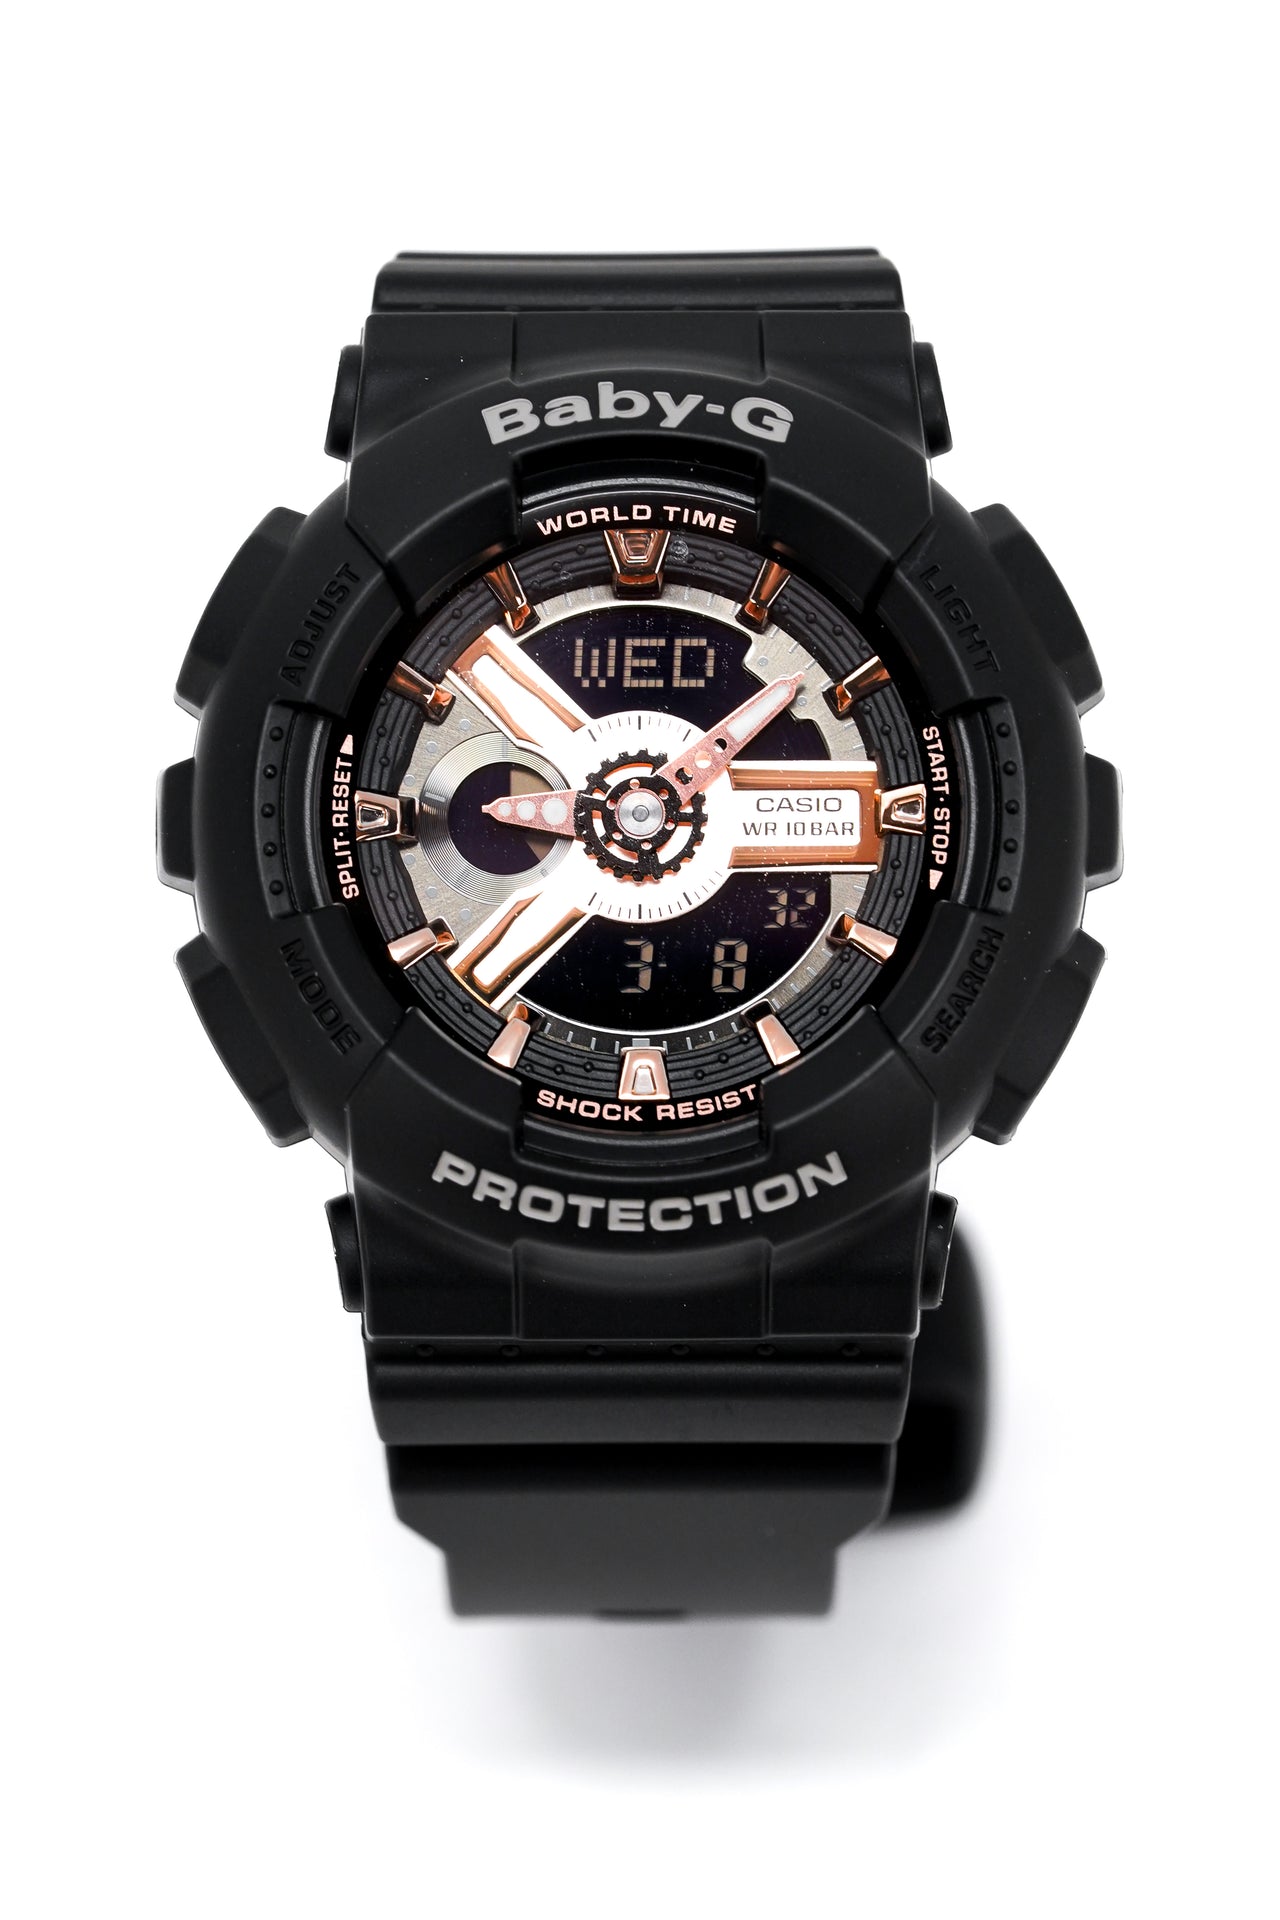 Casio Baby-G Watch Ladies Black/Rose Gold BA-110RG-1ADR